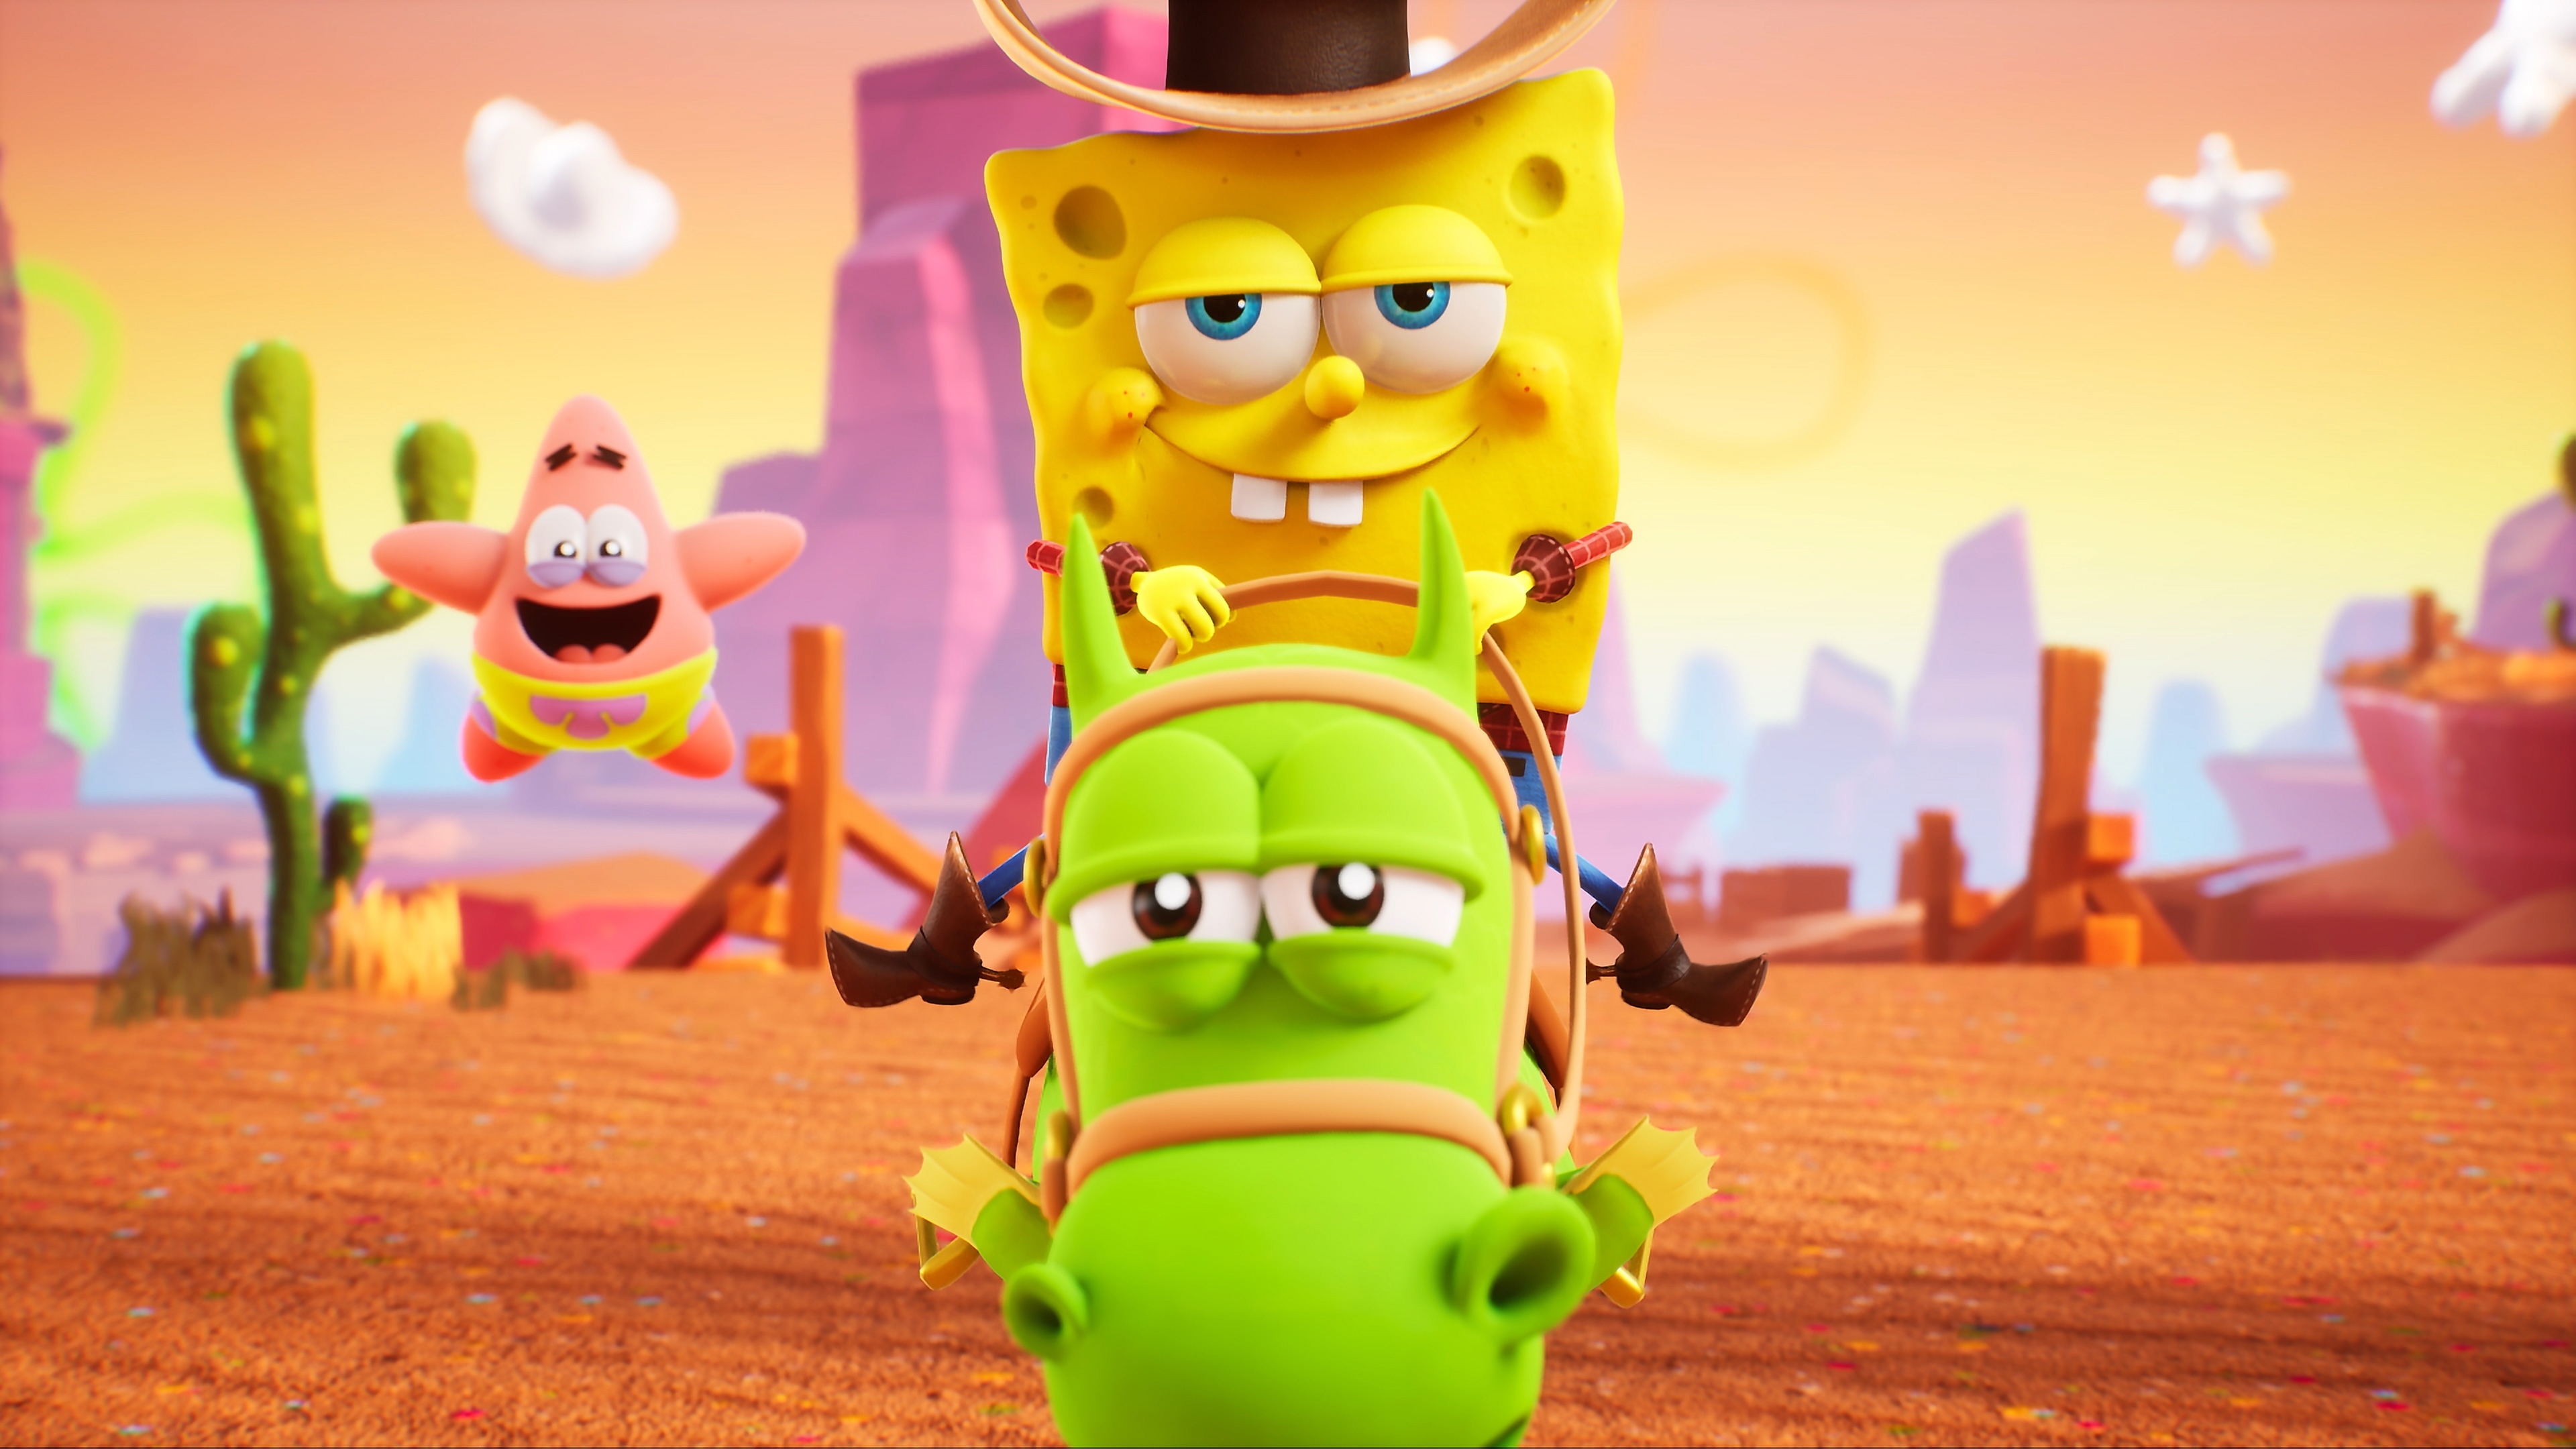 SpongeBob SquarePants: The Cosmic Shake – снимок экрана | PS4, PS5